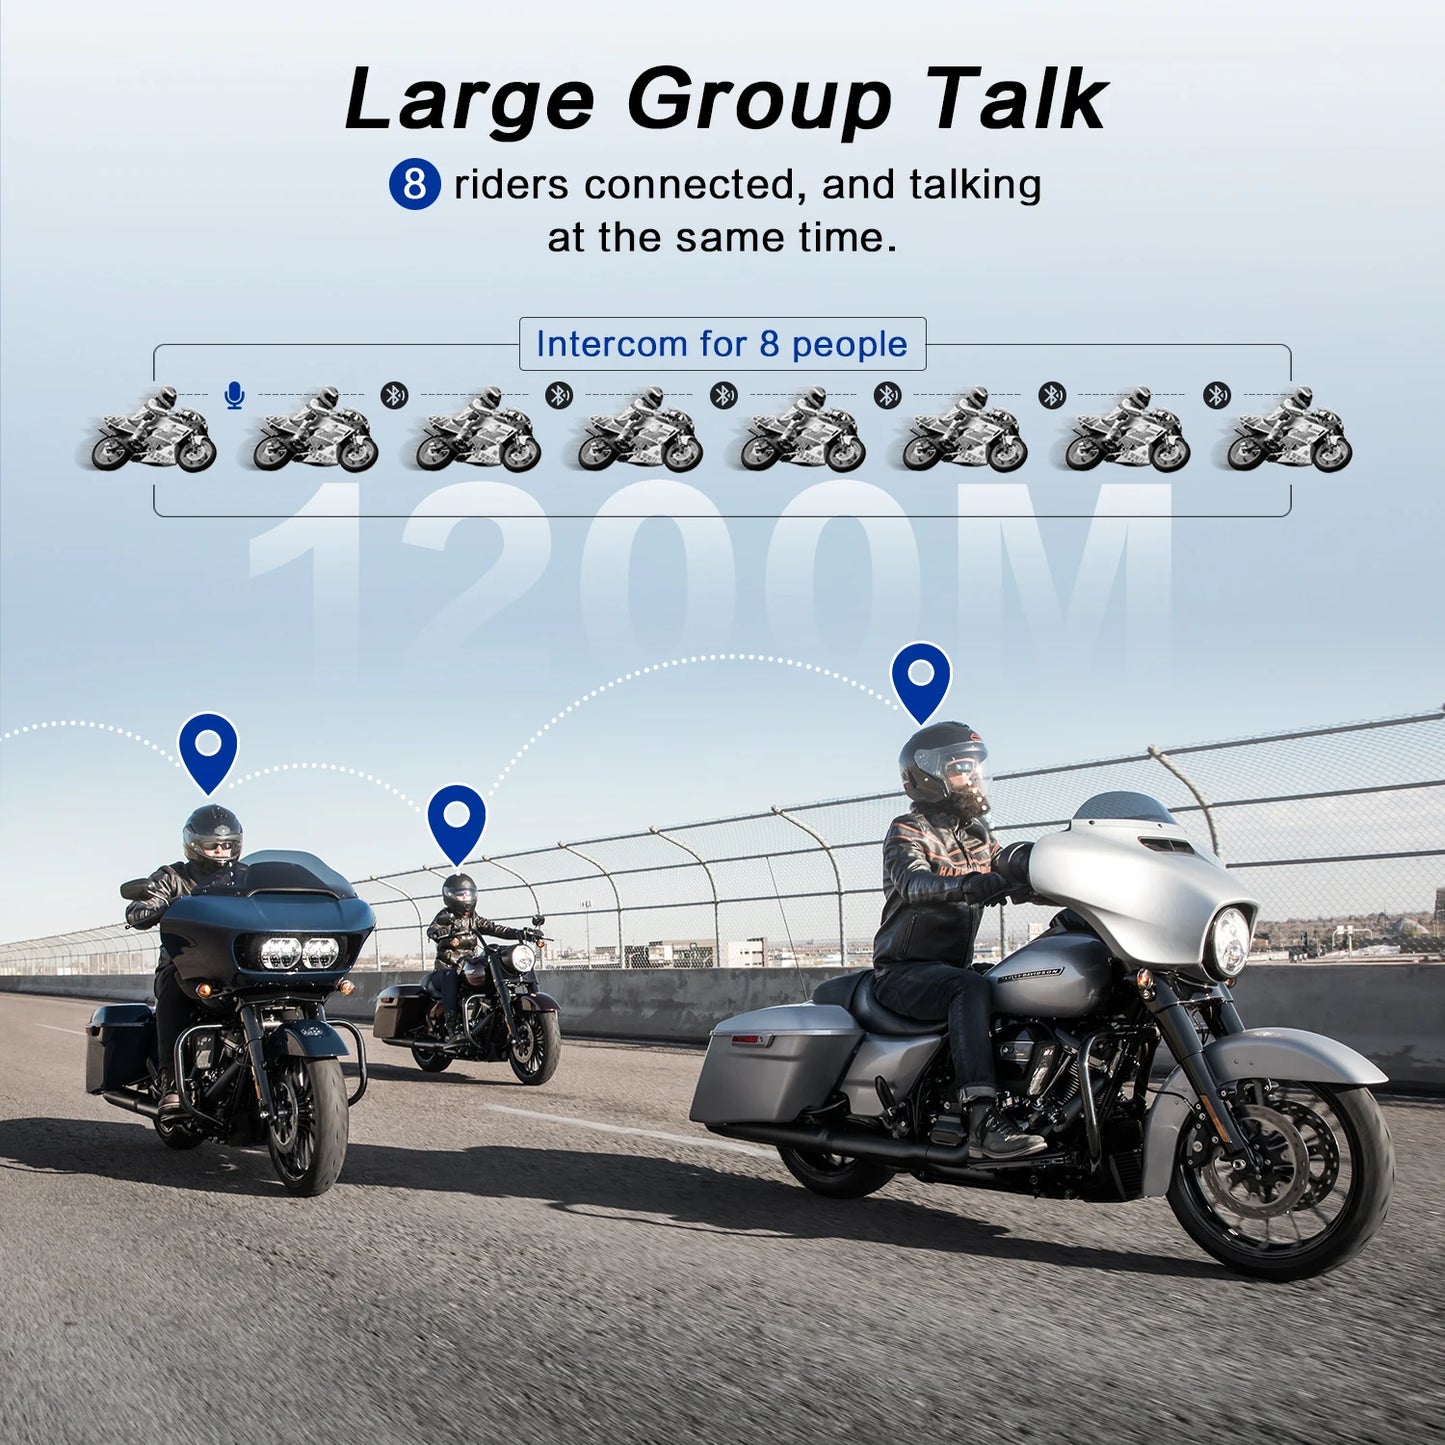 Motorcycle Helmet, , M1s Plus, Bluetooth Headset, 8 Riders Group Talk, Interphone Moto Music Sharing, Brothers Version, Black, One Size.